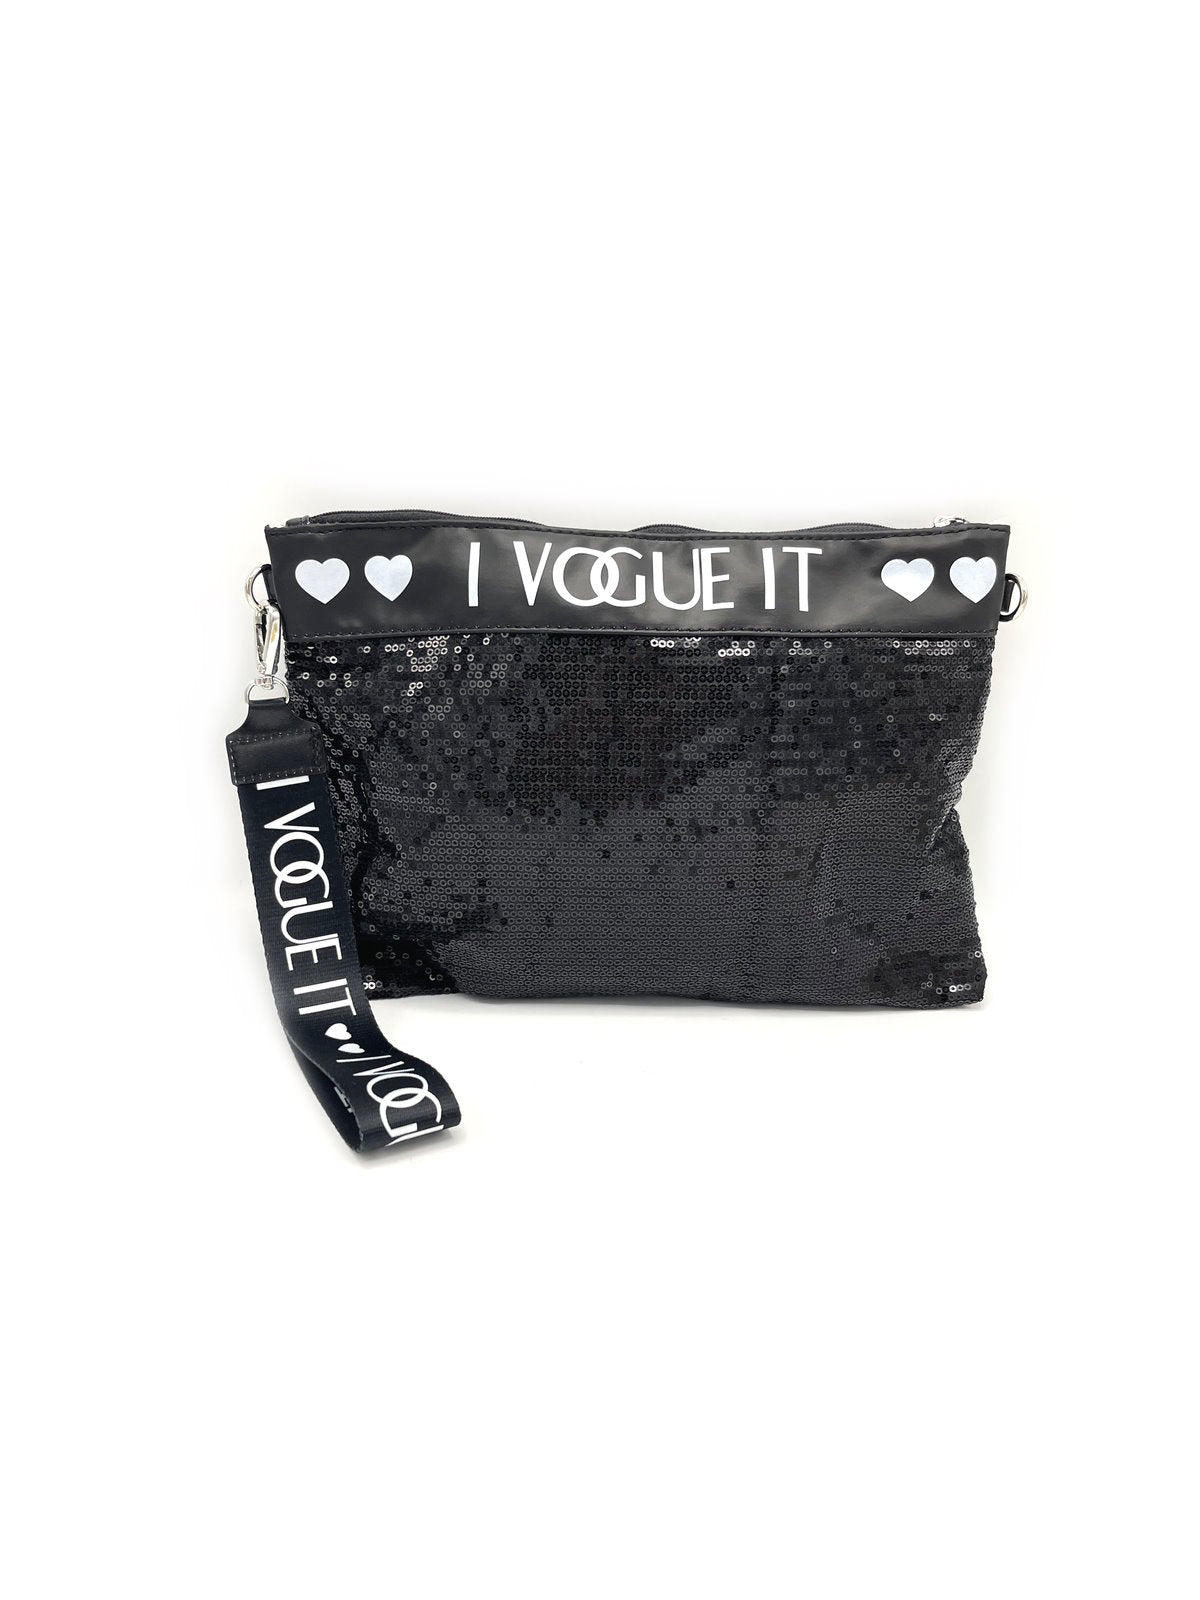 Eco-leather crossbody bag, brand I Vogue It, art. 20433.364